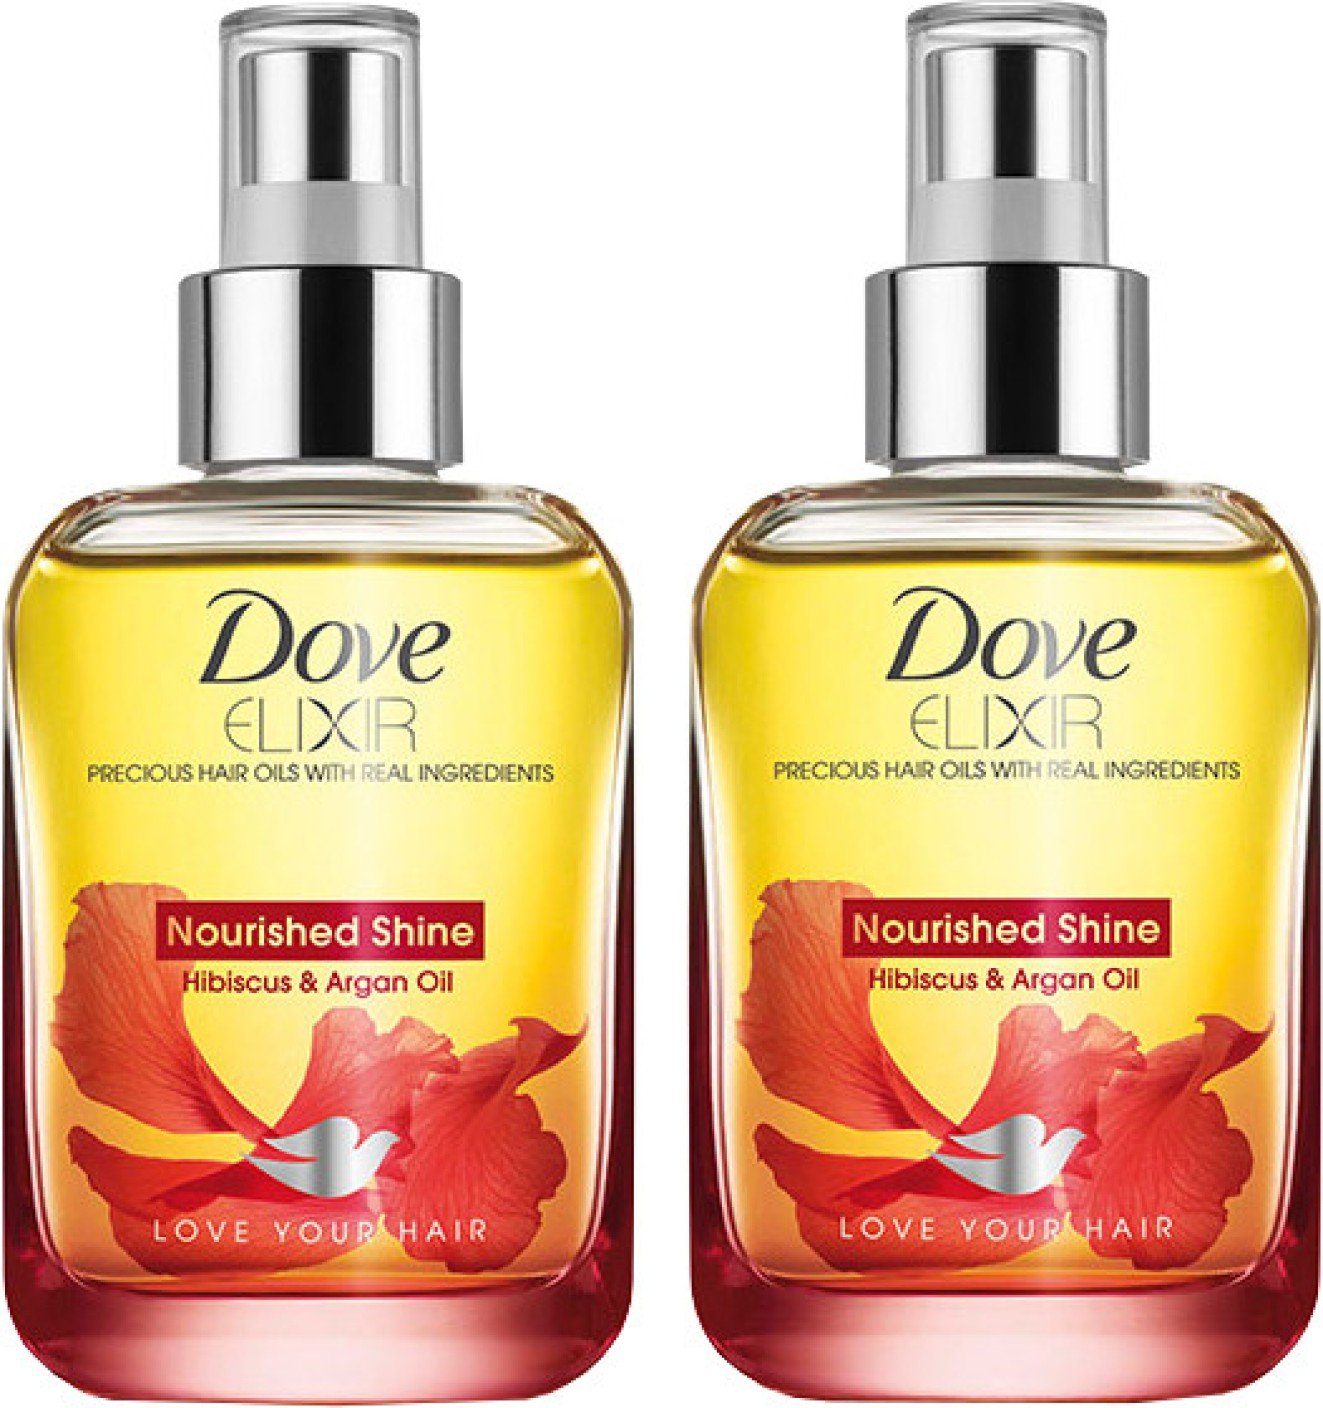 Dove Elixir Nourished Shine Hibiscus and Argan Hair Oil